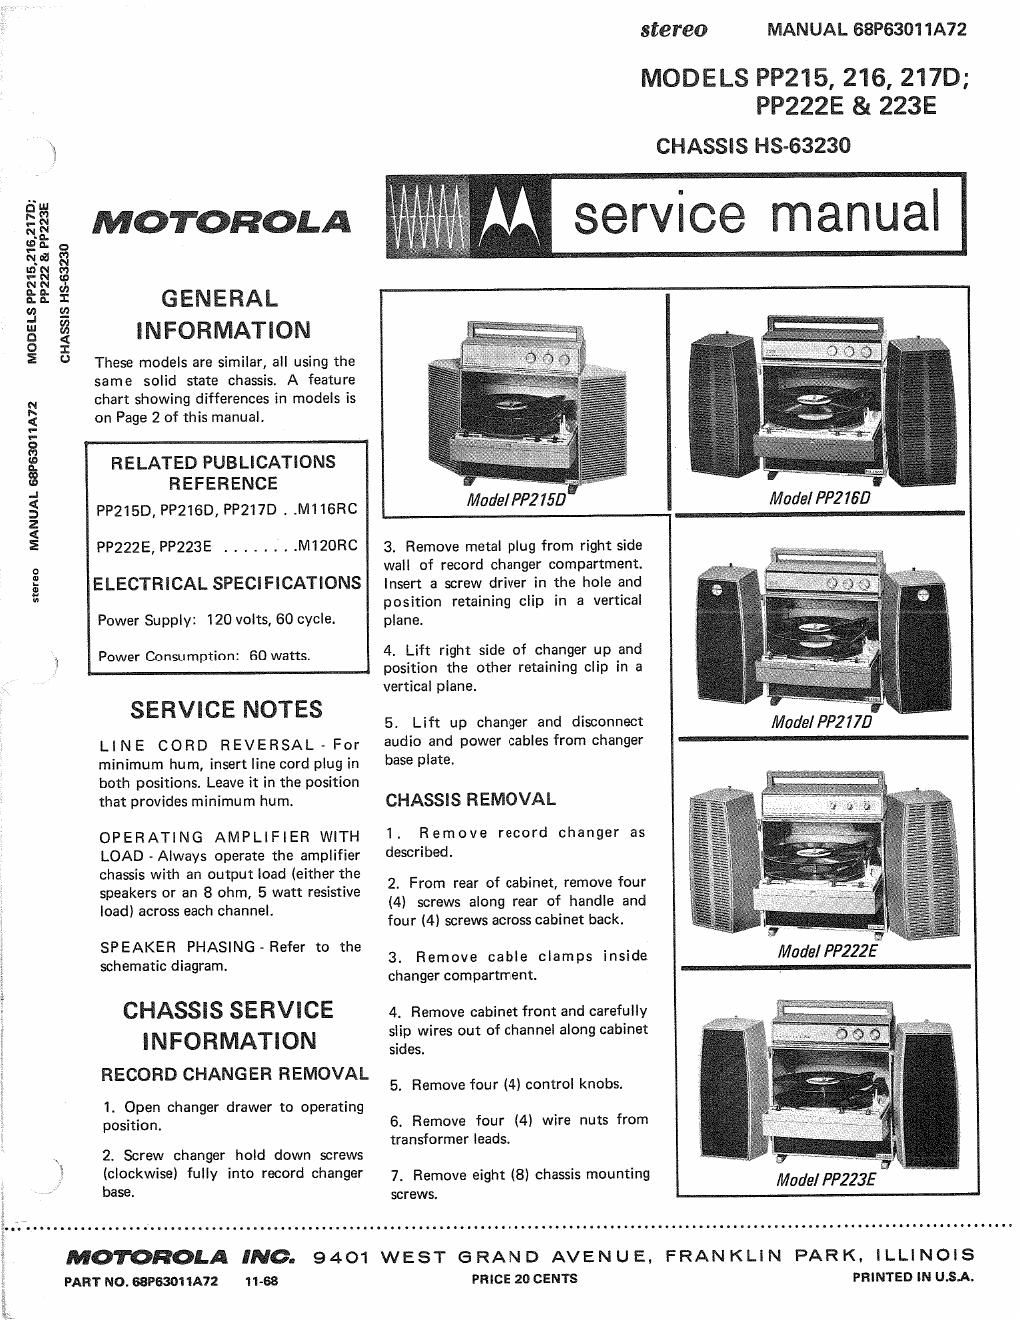 motorola pp 216 d service manual